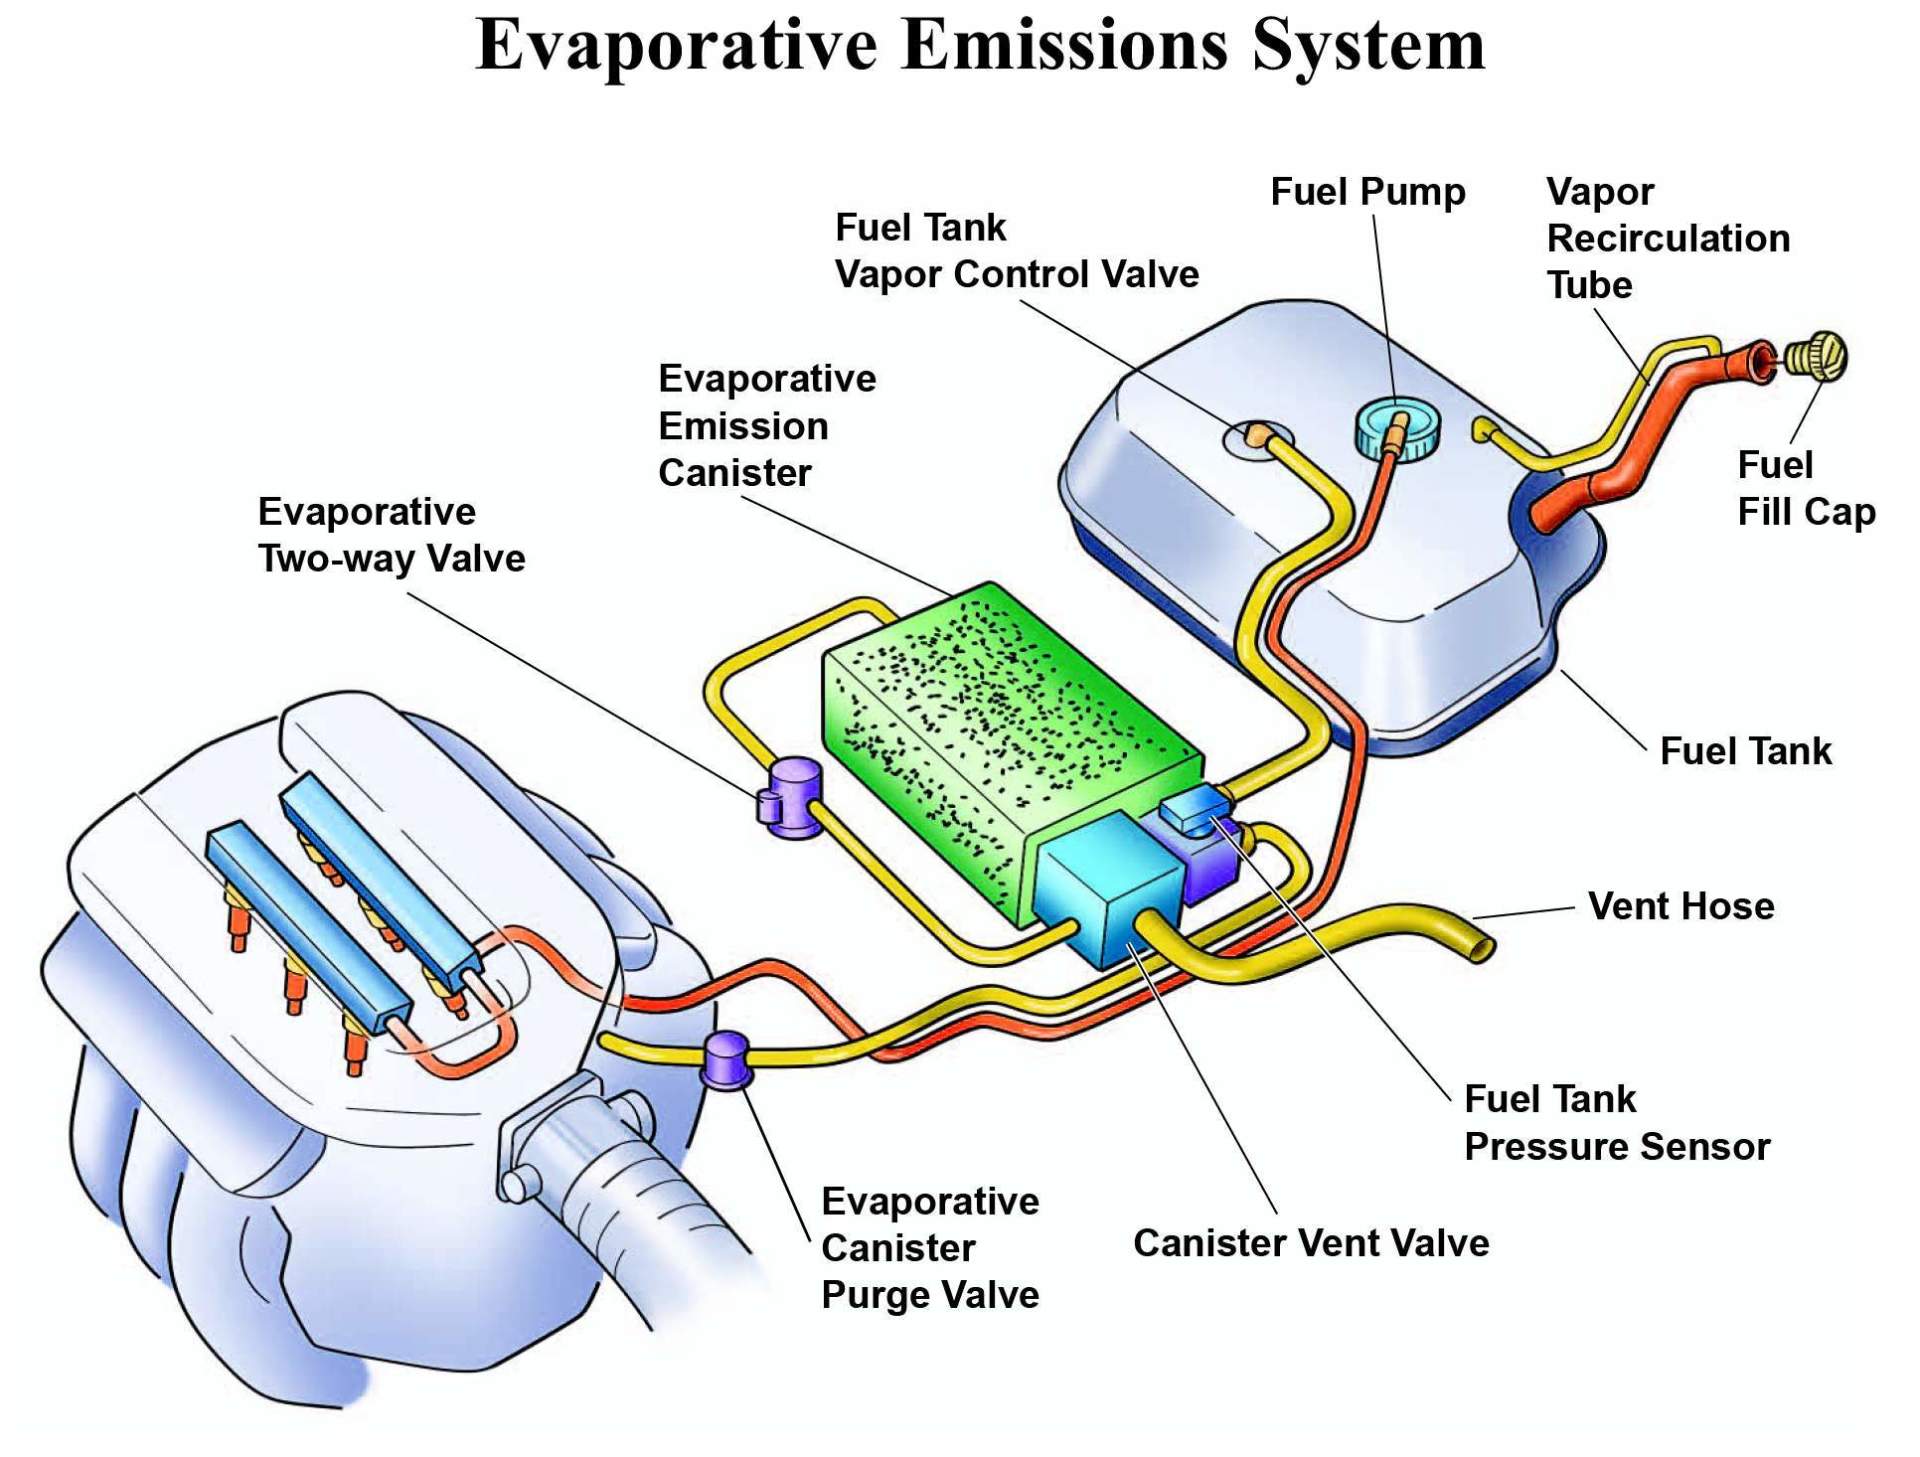 Evaporative Emissions System